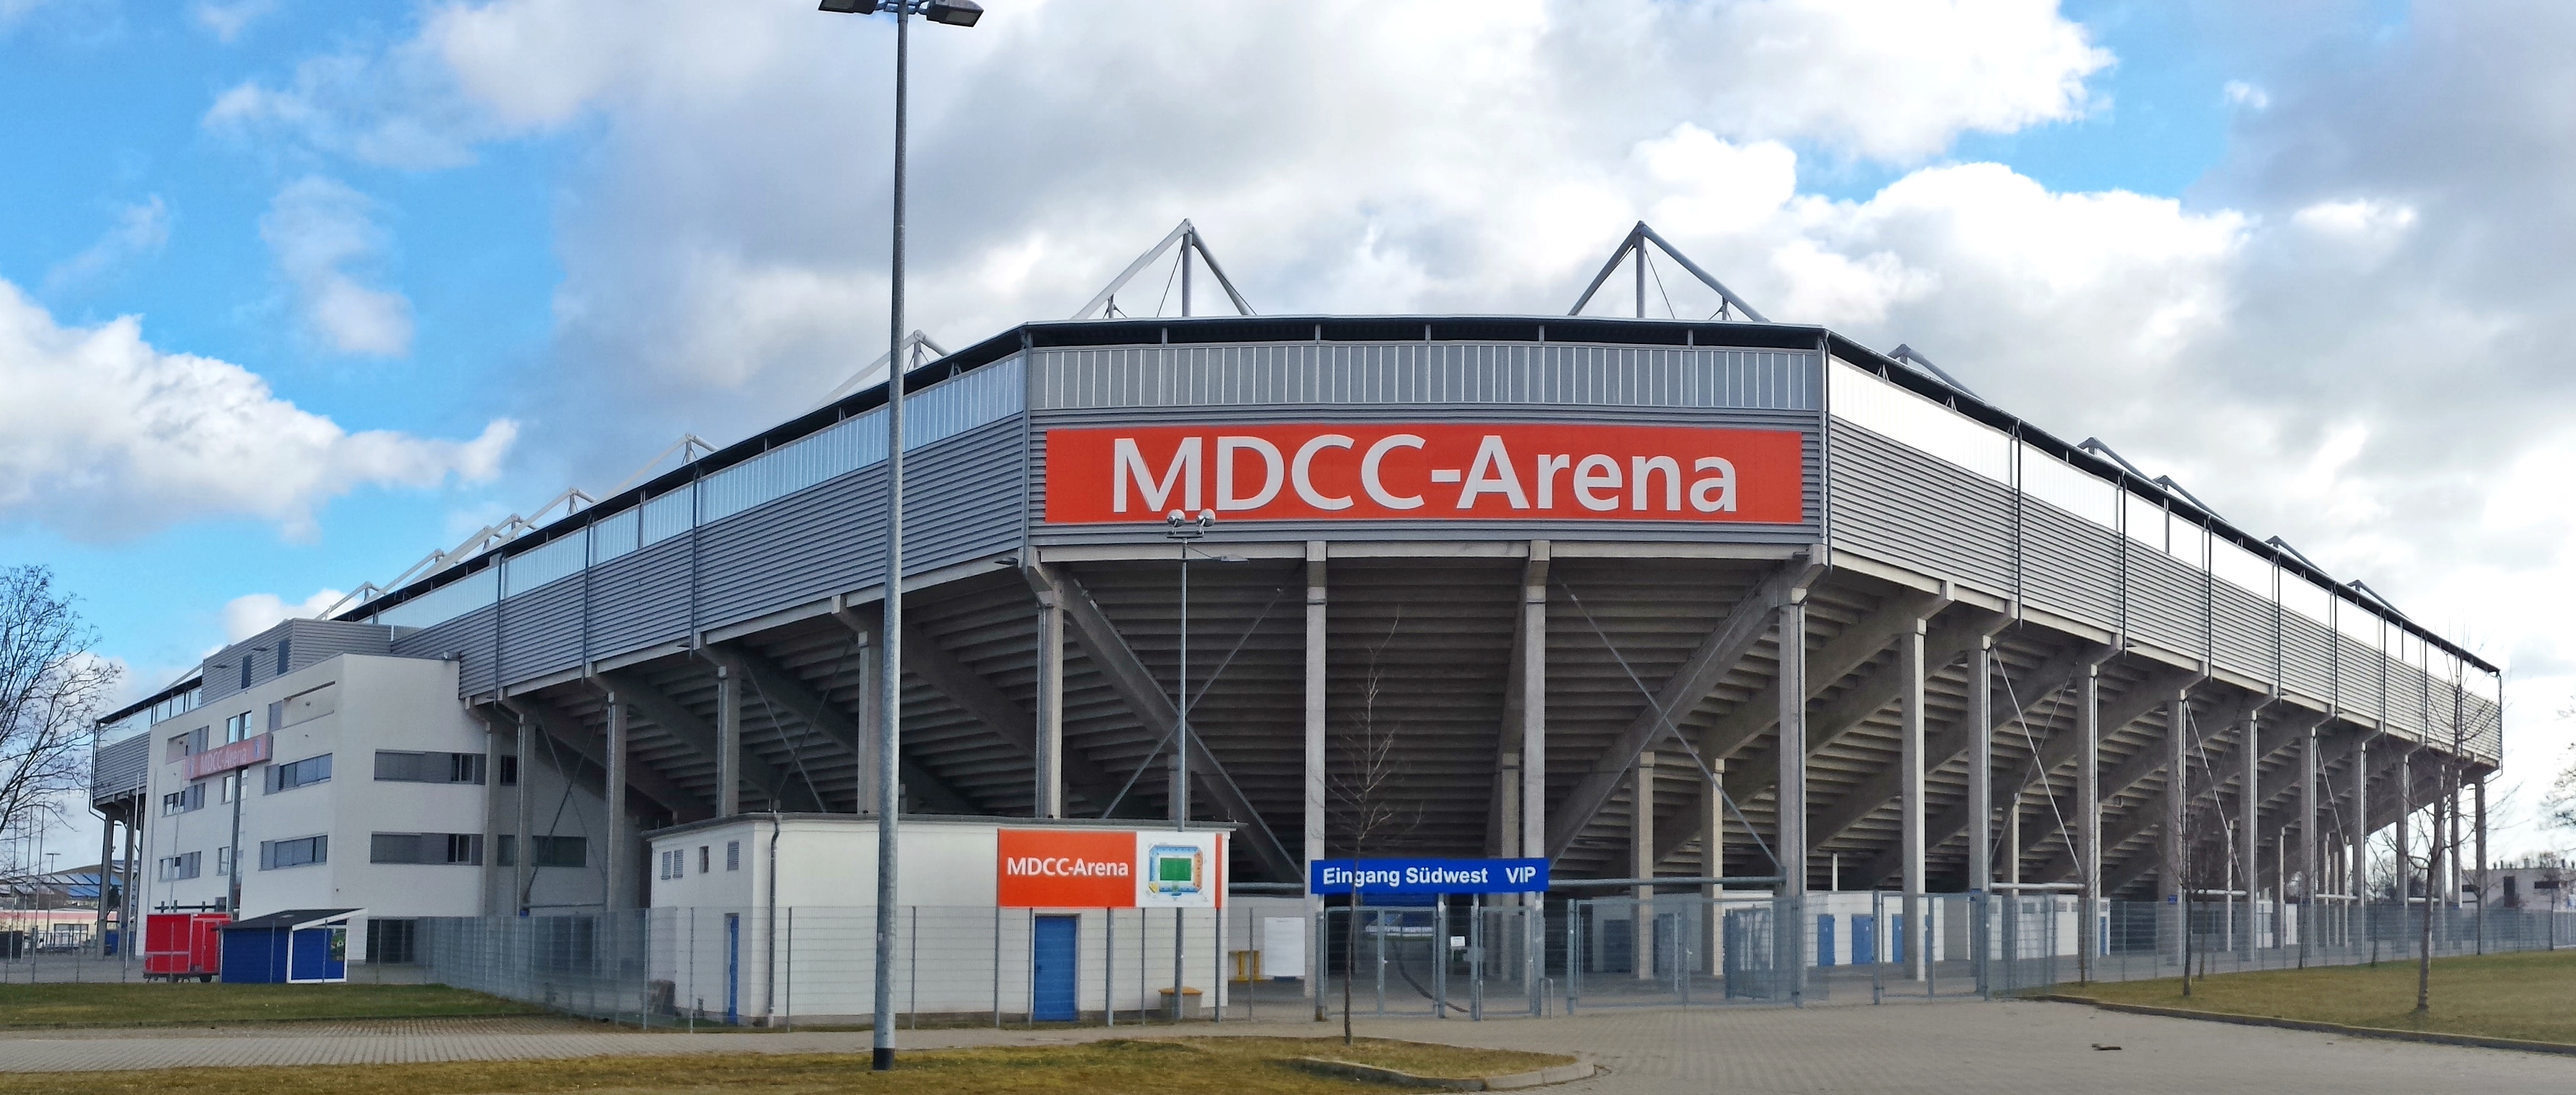 Mdcc-Arena